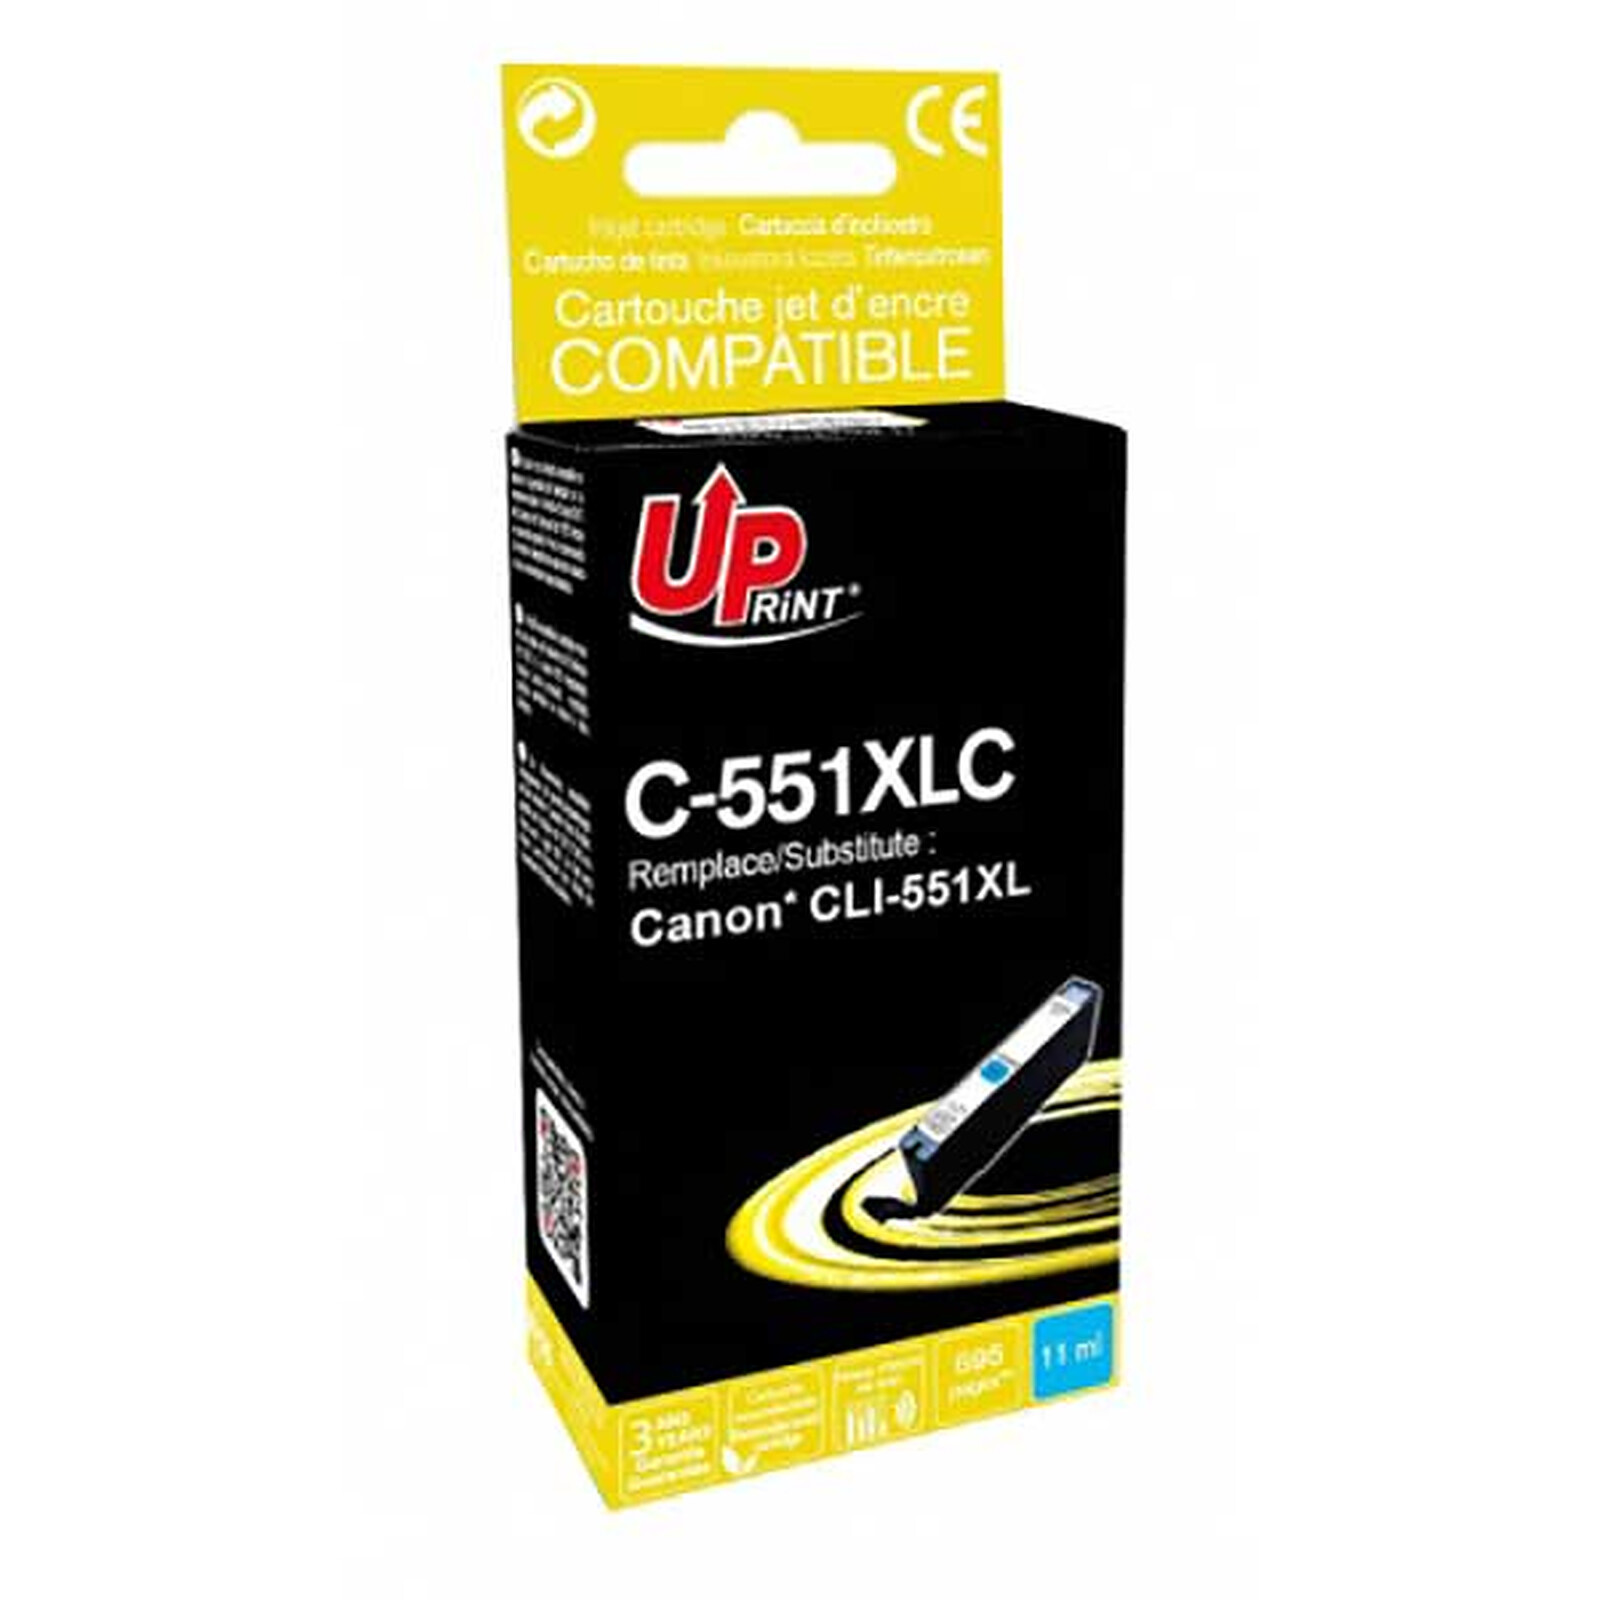 Cartouche compatible HP 302XL - cyan, magenta, jaune - Uprint